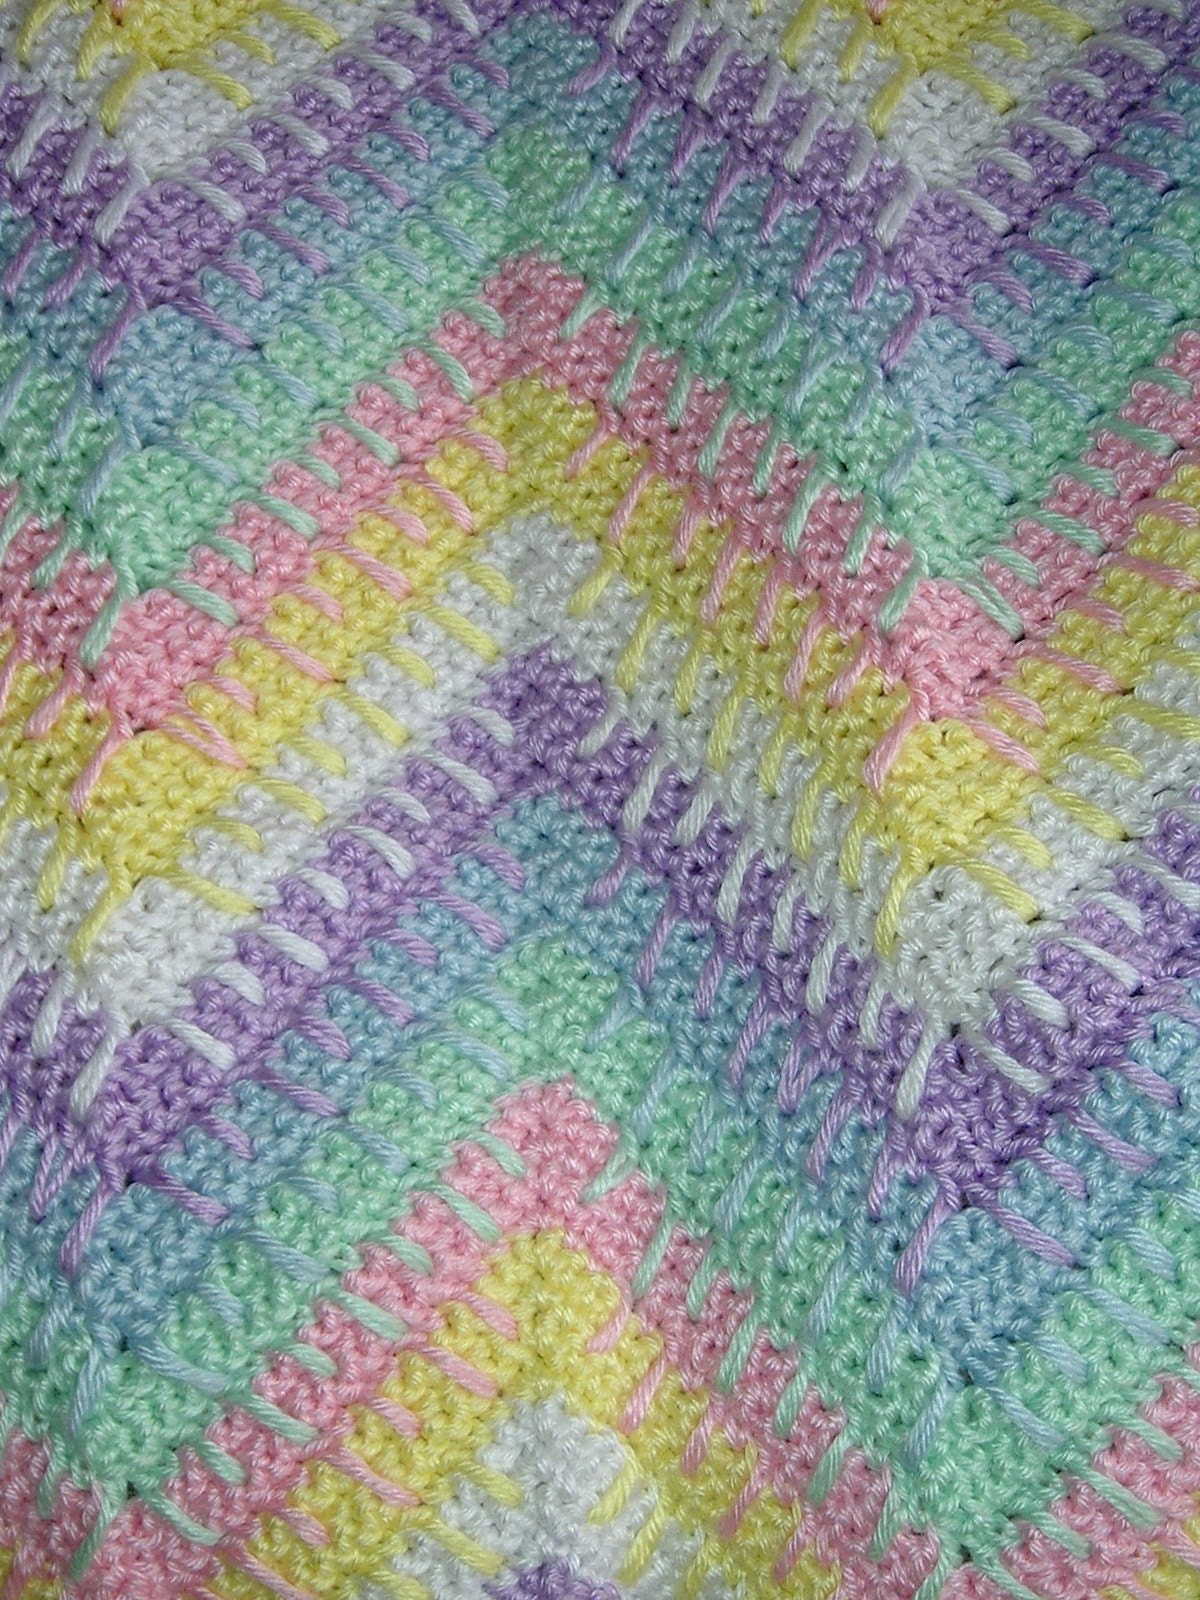 FREE EASY CROCHET BABY BLANKET AFGHAN PATTERN Crochet